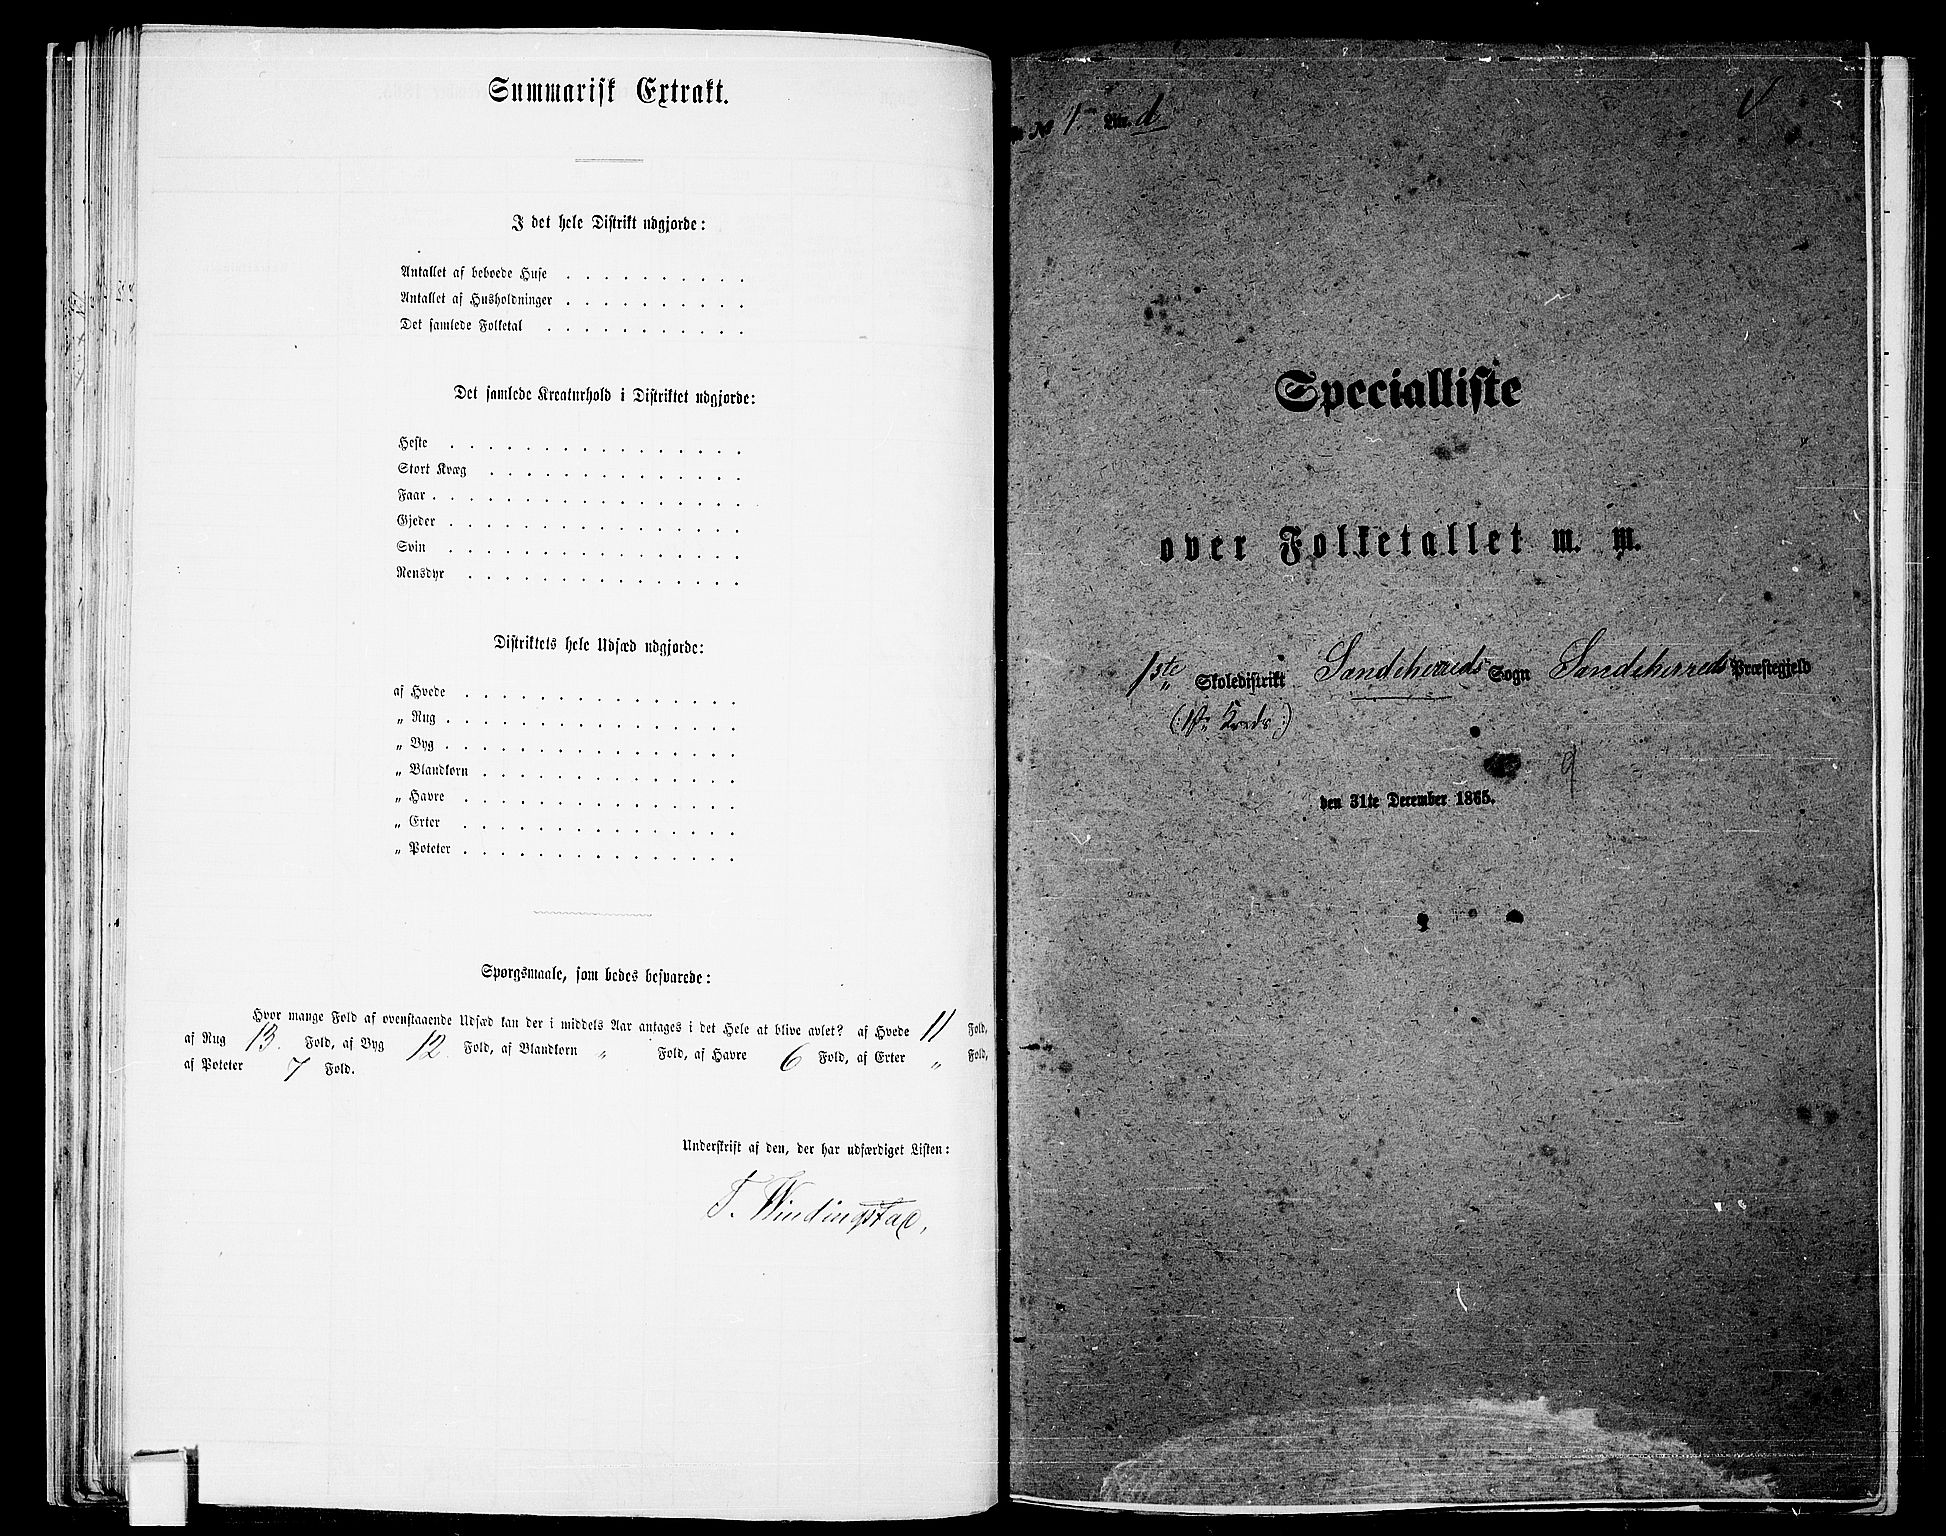 RA, Folketelling 1865 for 0724L Sandeherred prestegjeld, Sandeherred sokn, 1865, s. 47